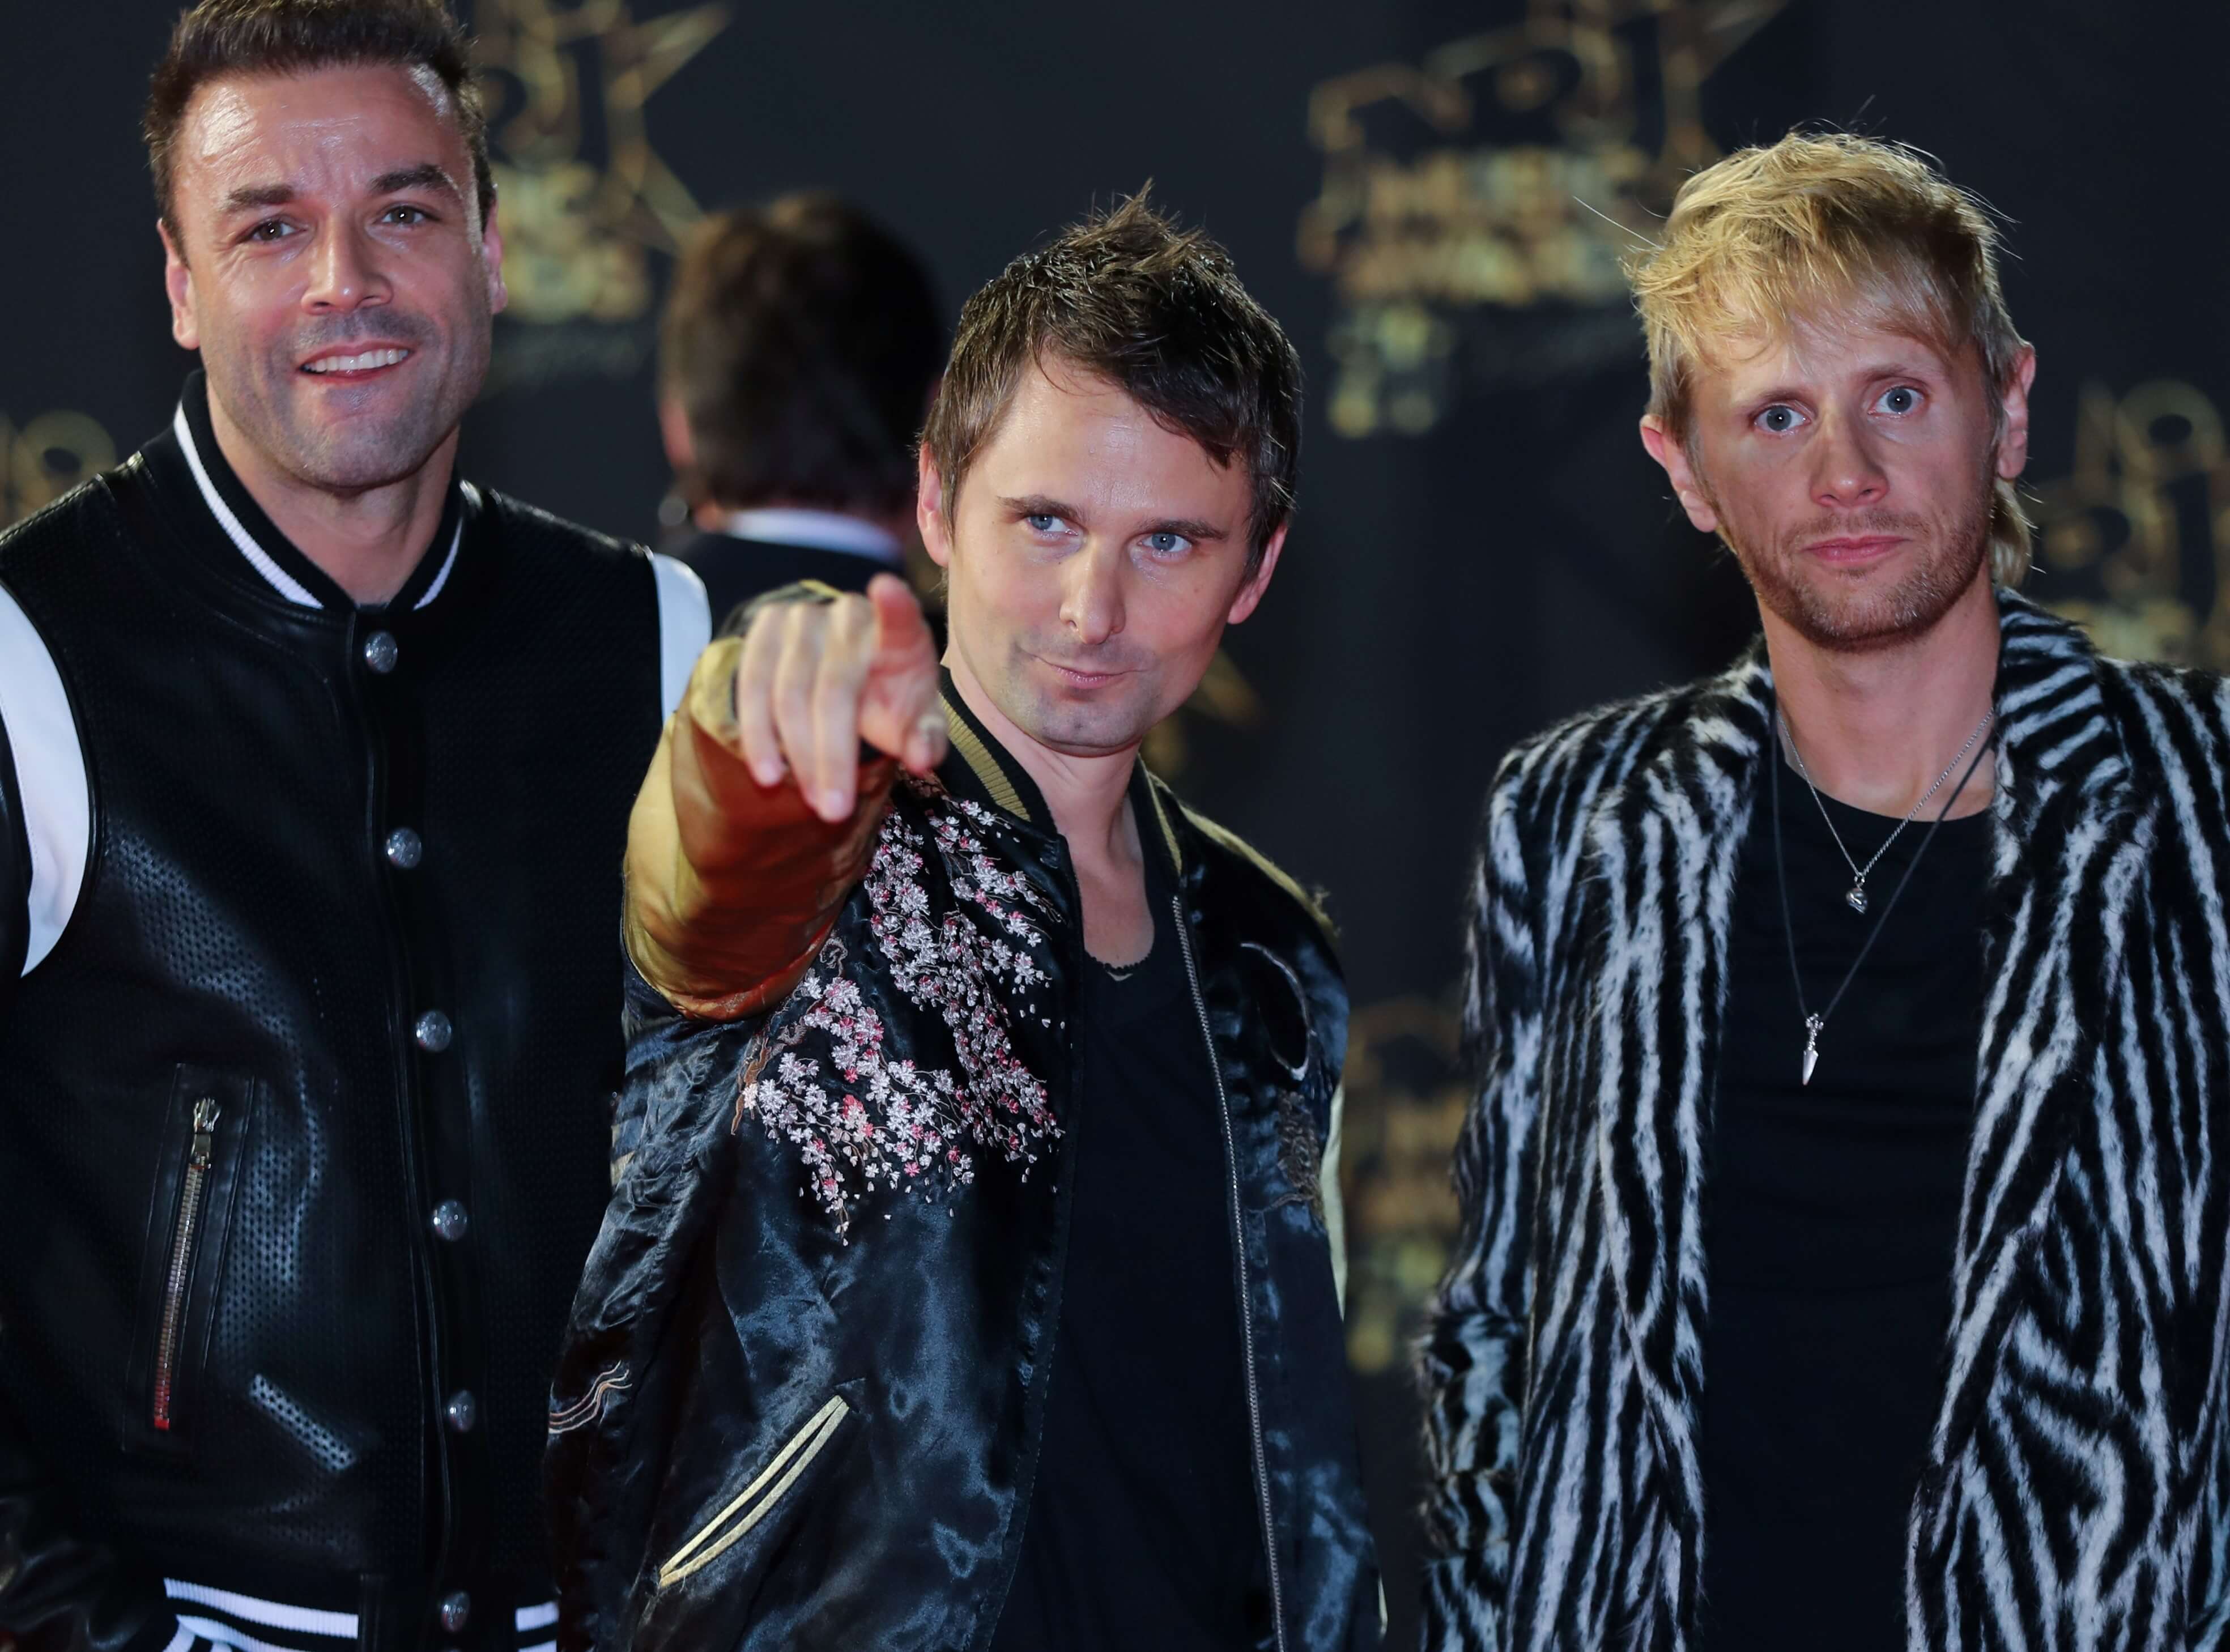 Muse members wearing jackets